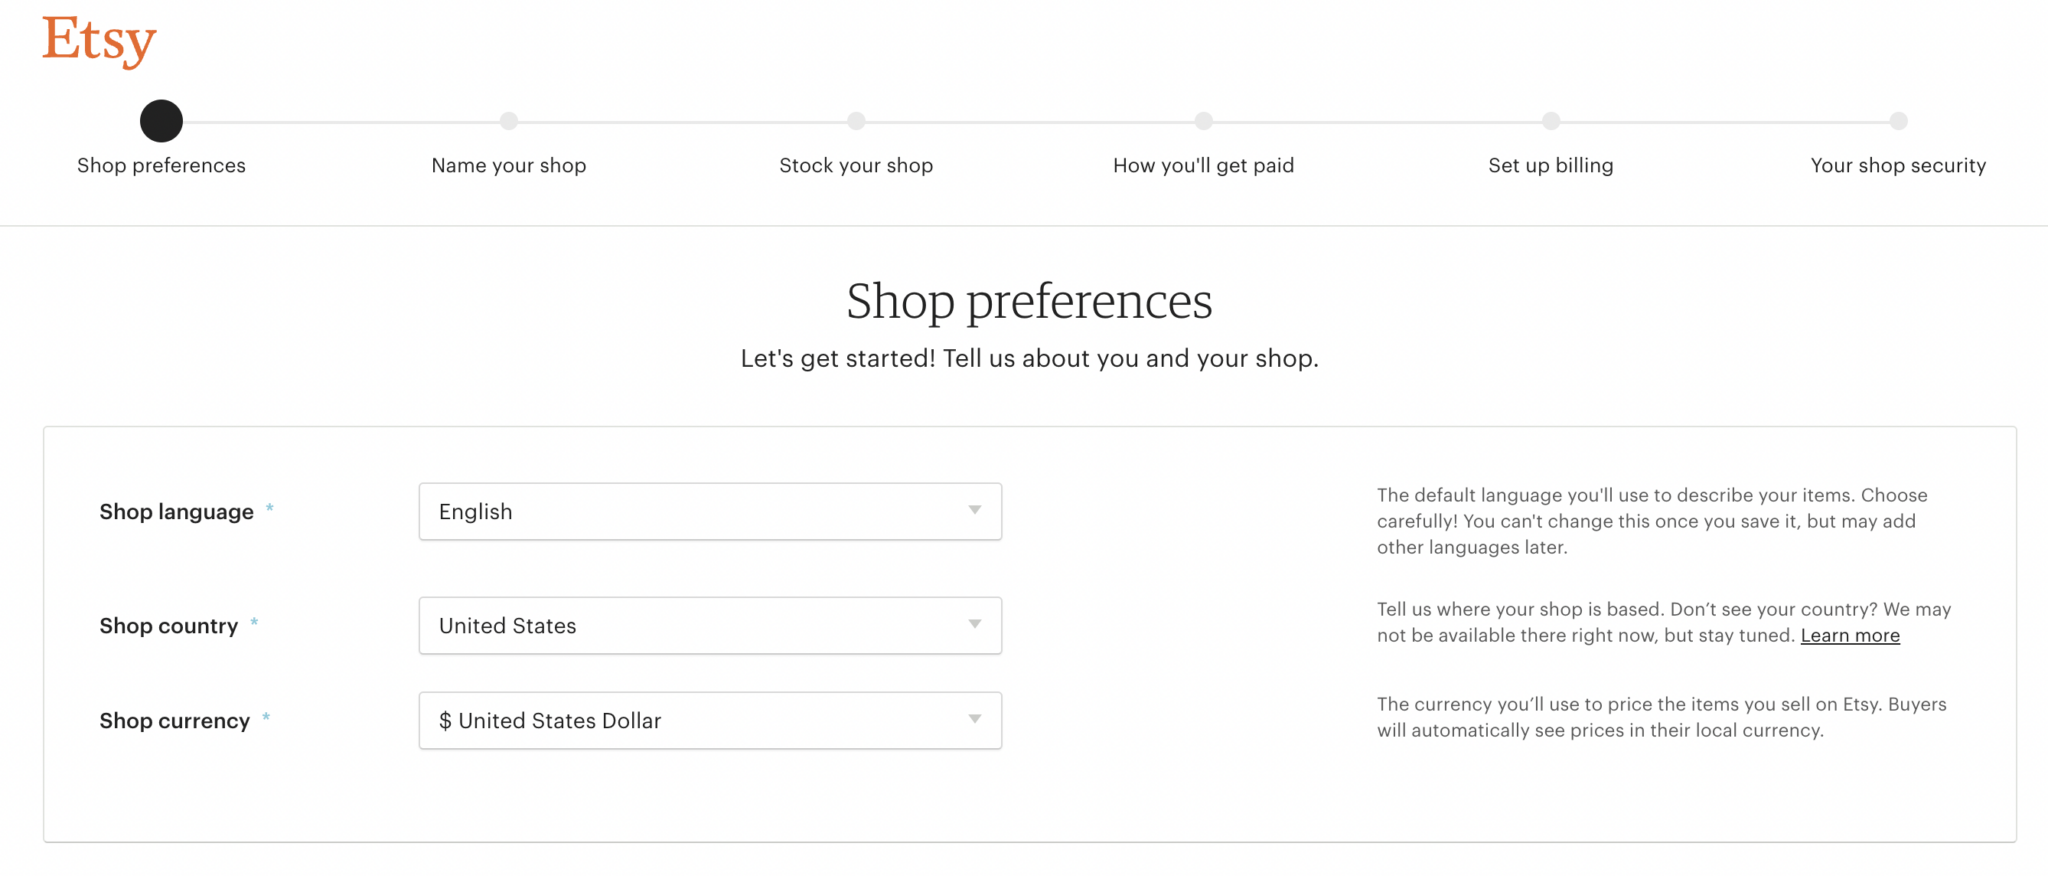 Shop preferences
